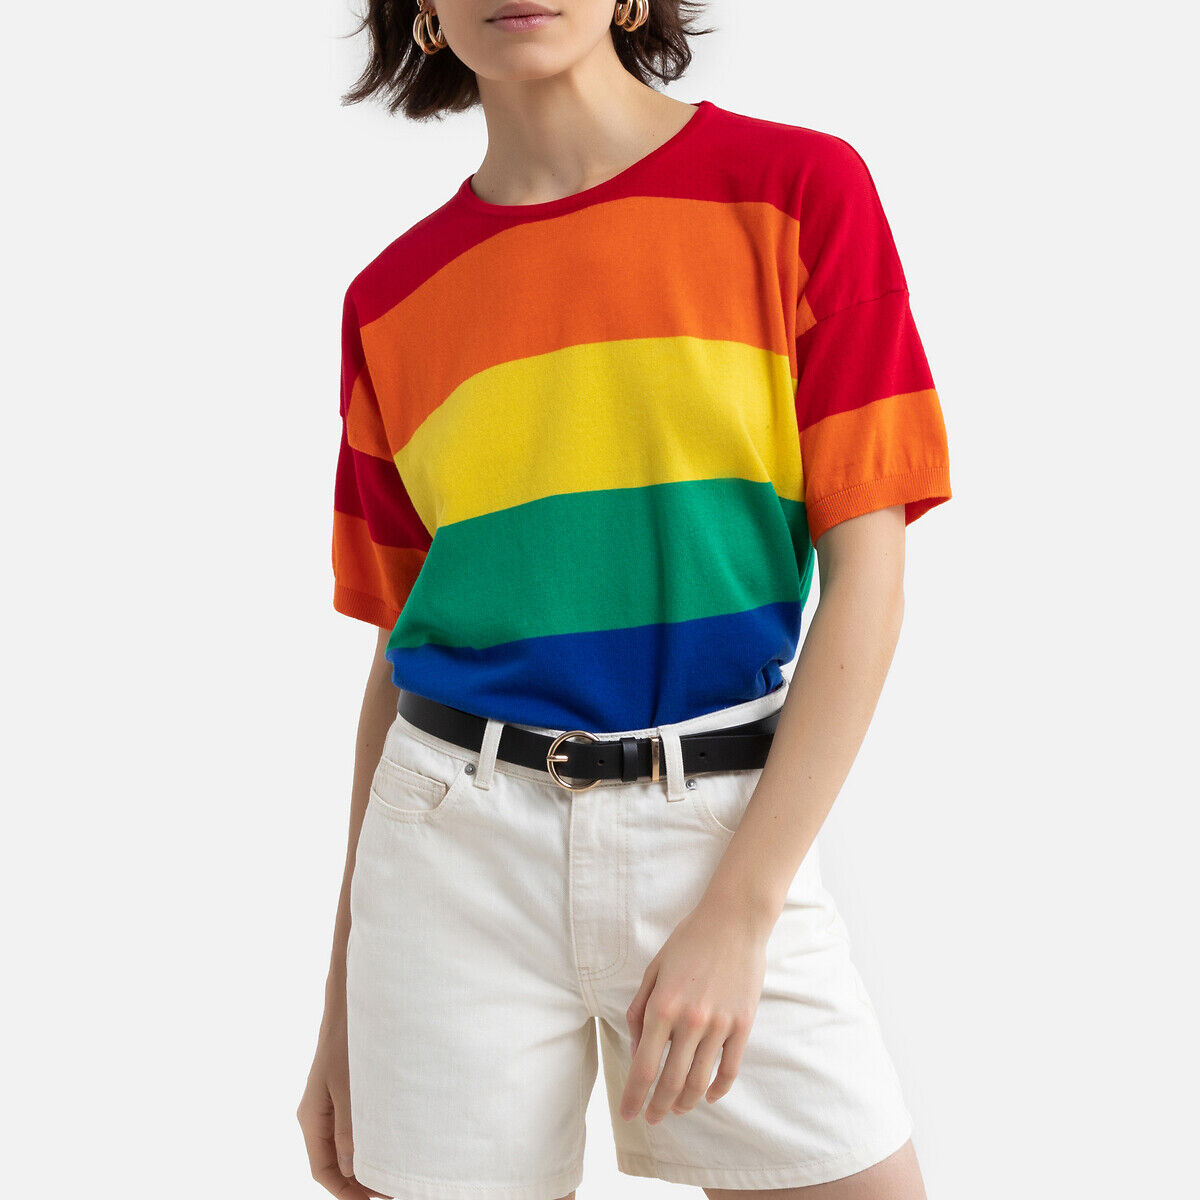 Benetton T-shirt multicolor de mangas curtas, às riscas   Multicolor